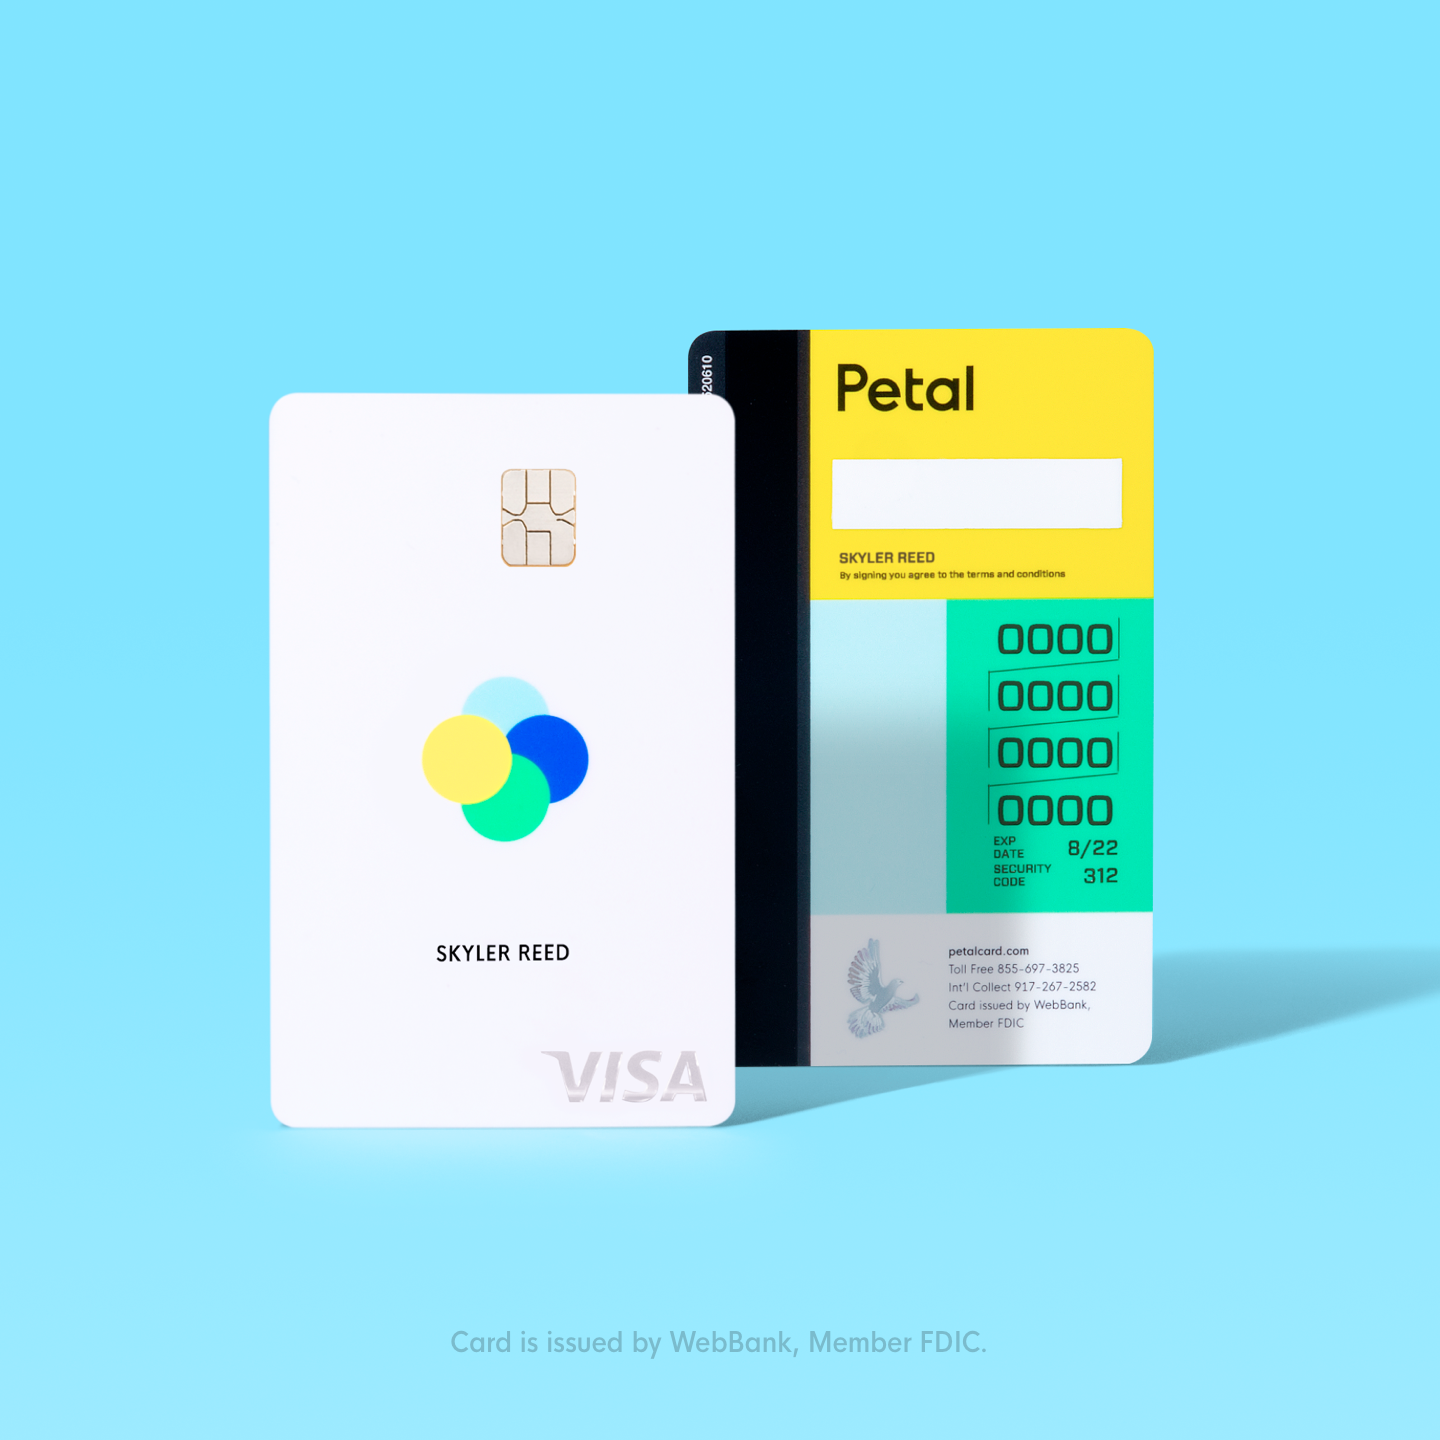 The Petal Visa card